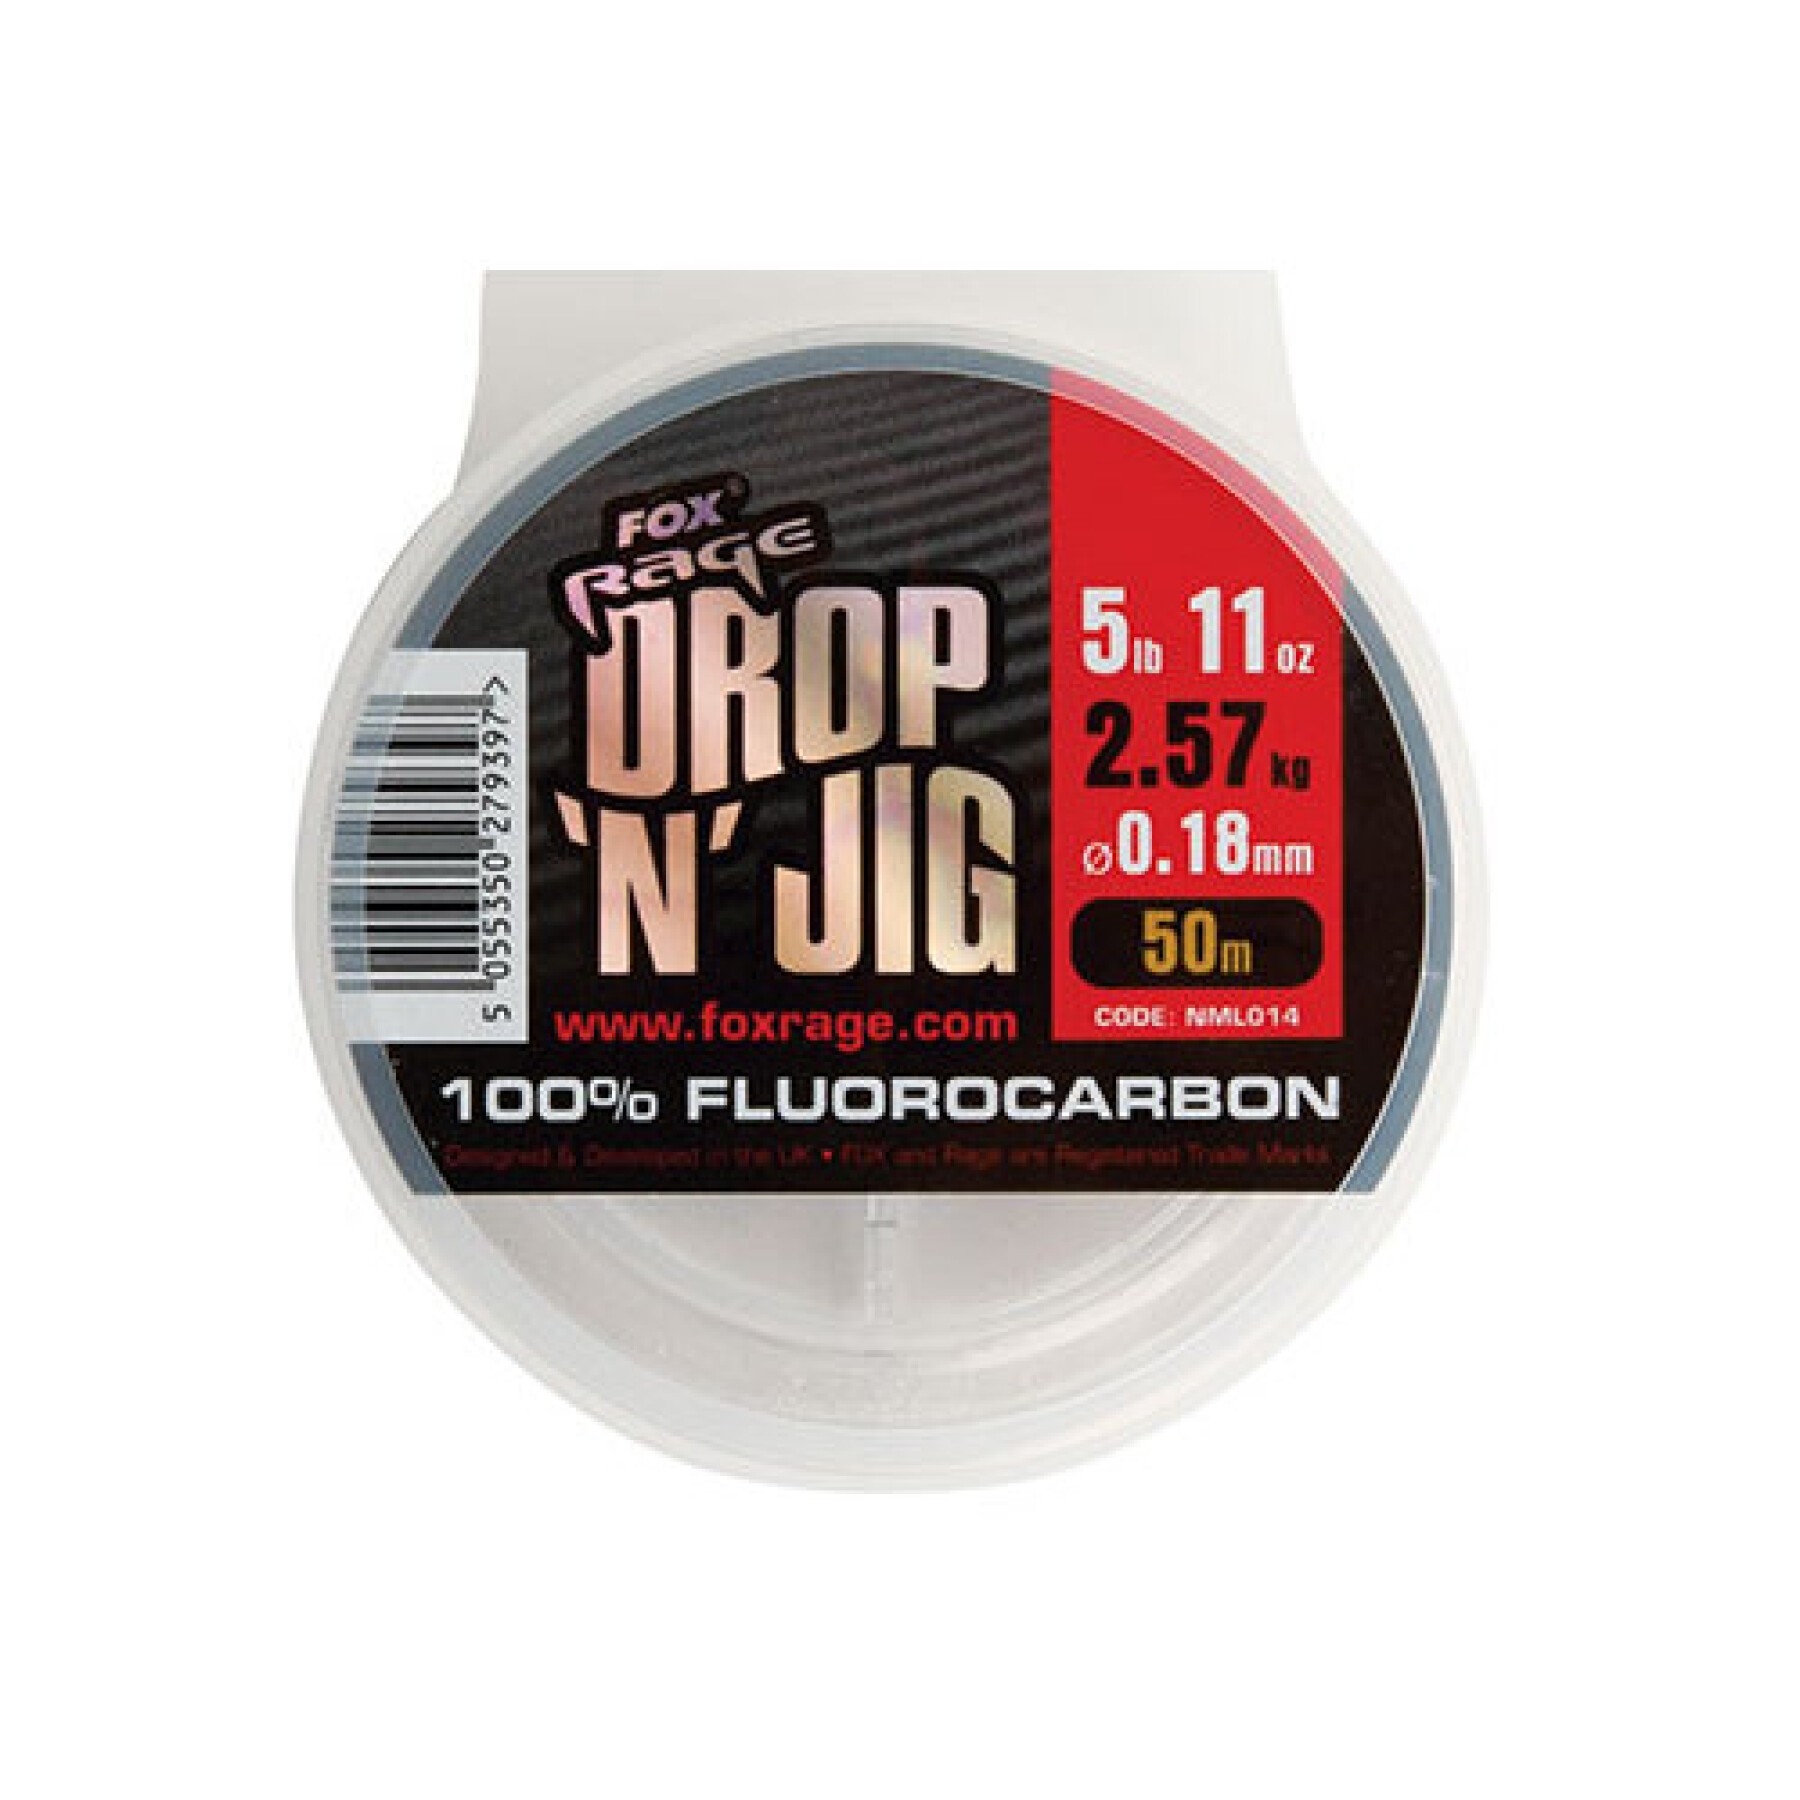 Fluorocarbon Fox Rage drop & jig 4.25kg / 9.37lb x 50m